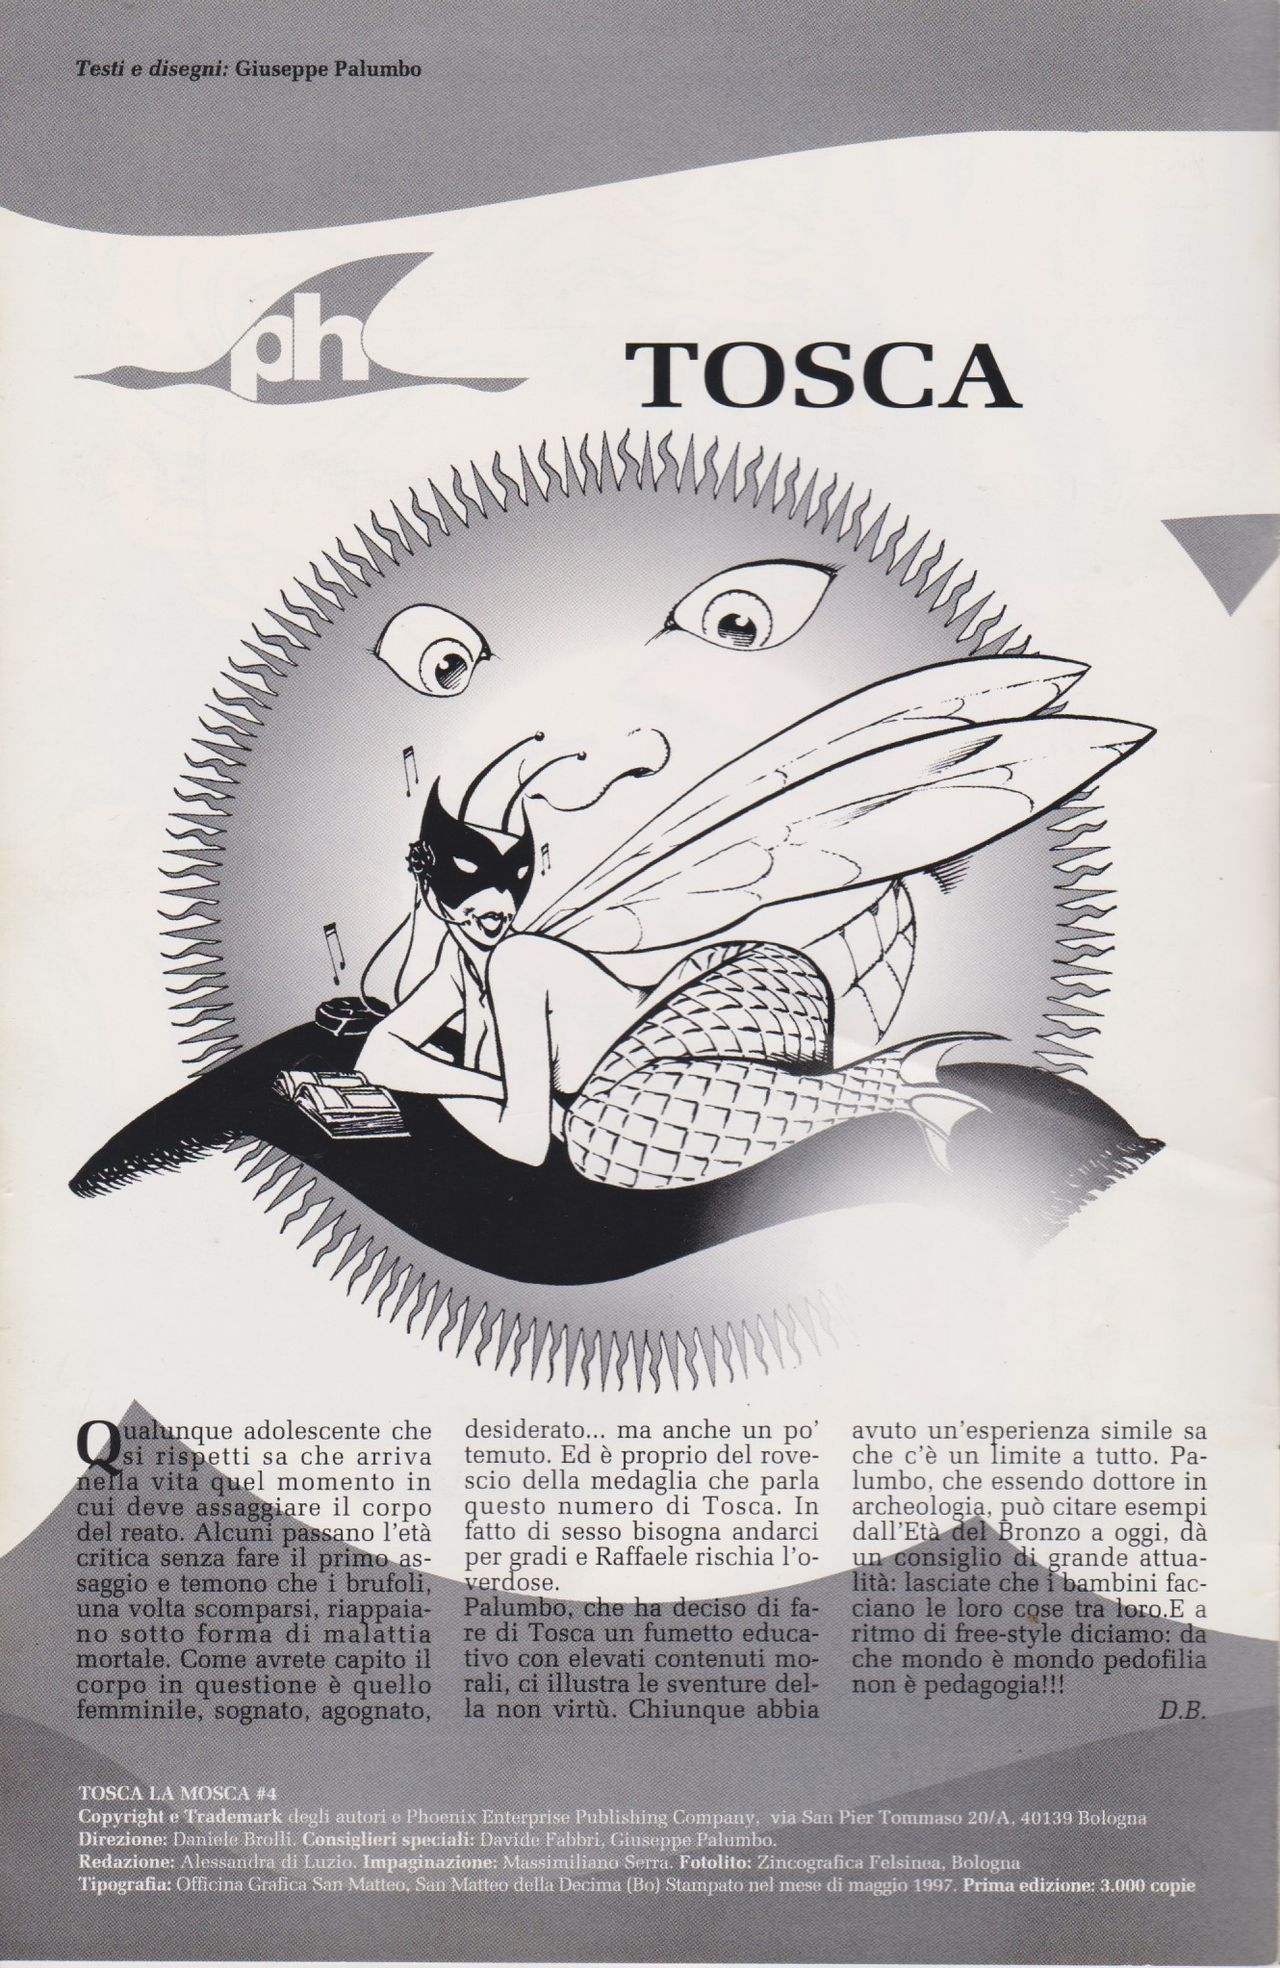 [Giuseppe Palumbo] Tosca la Mosca #4 - Tosca se la vede con Fosca (italian) 1